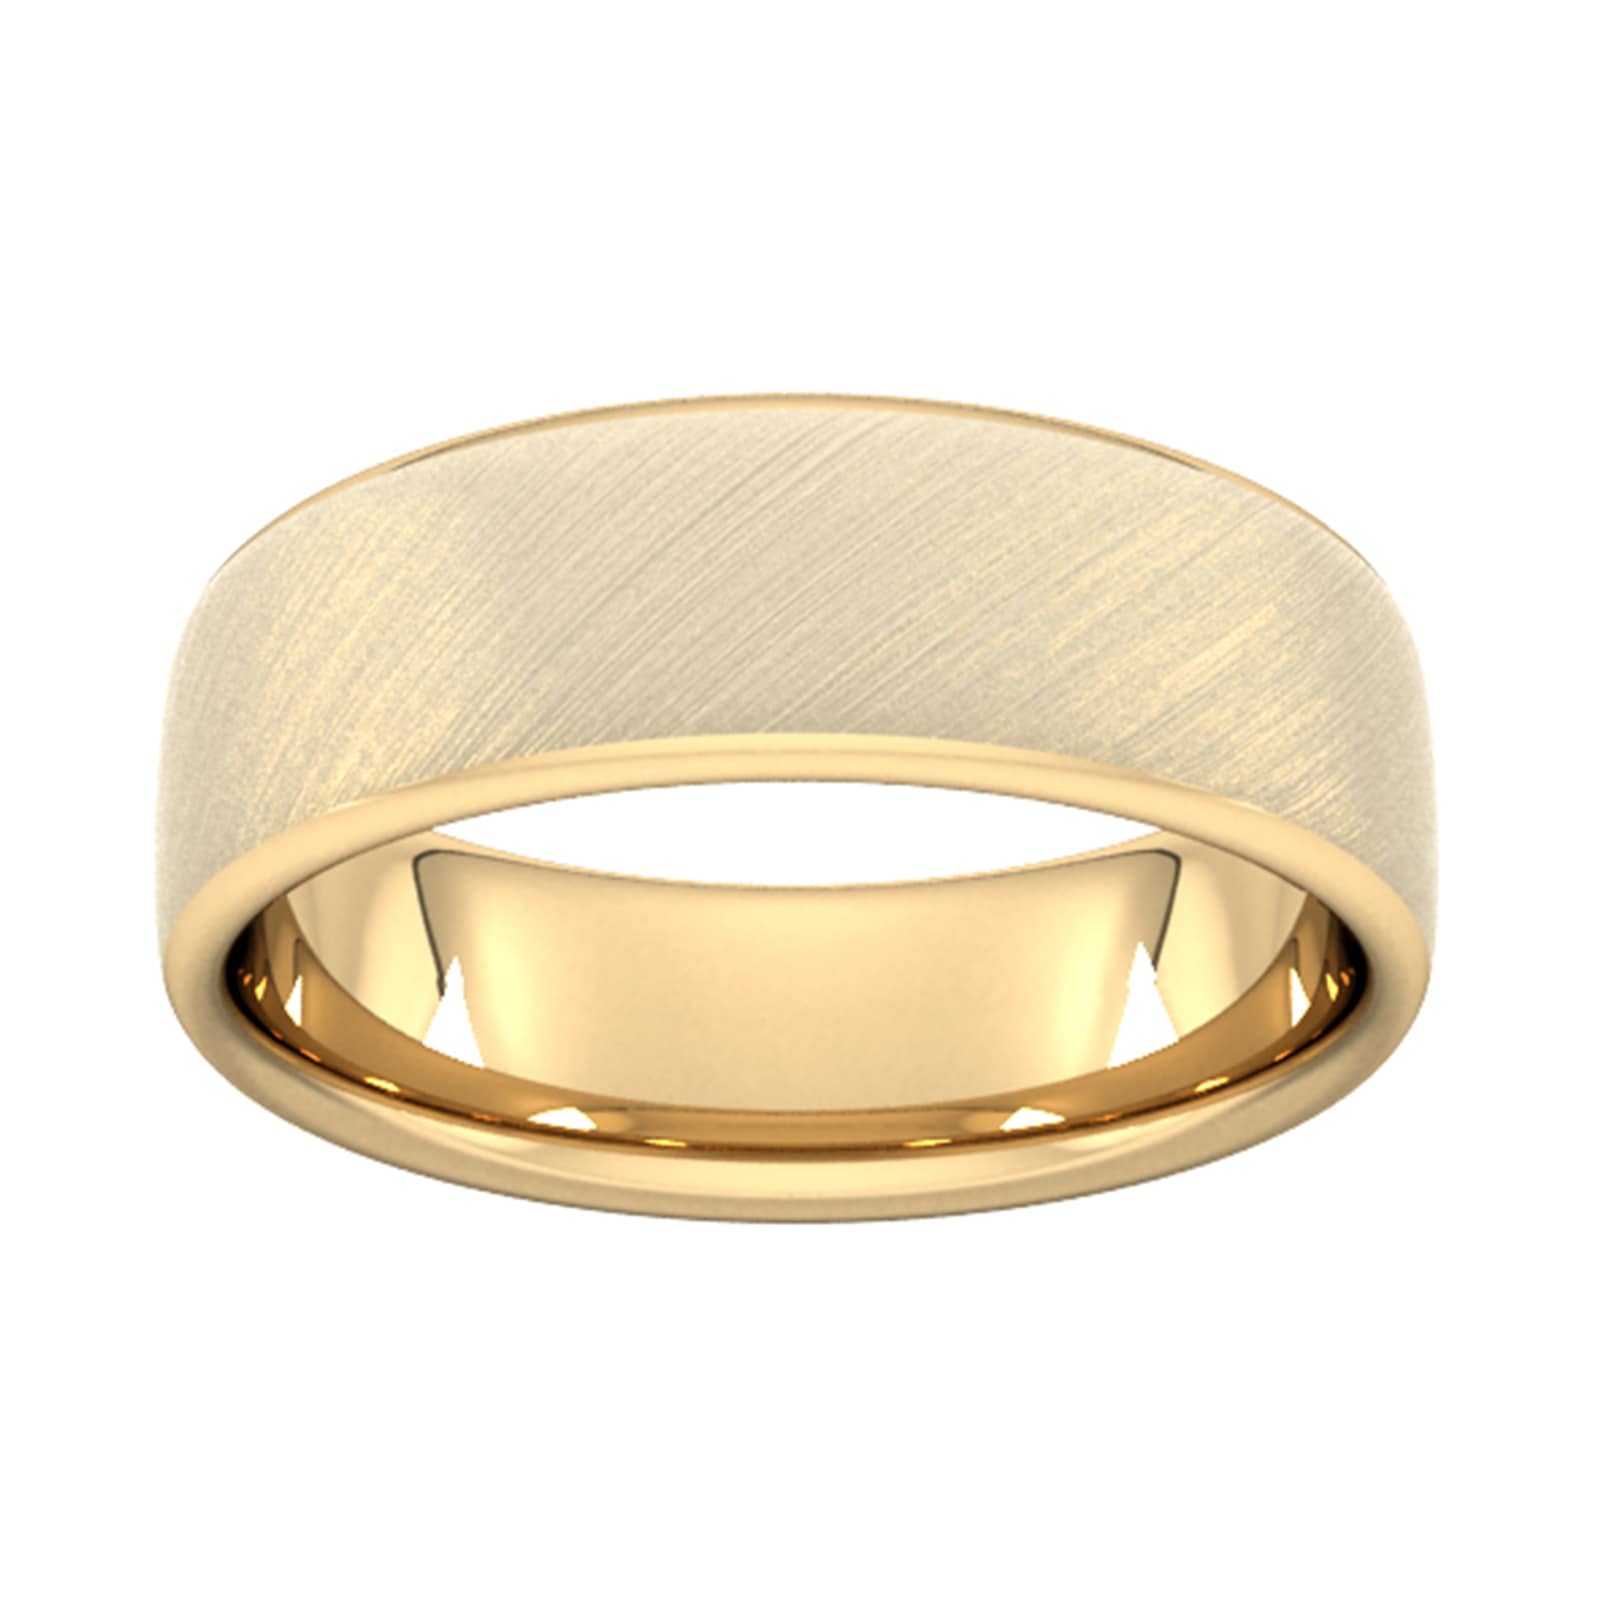 7mm Traditional Court Standard Diagonal Matt Finish Wedding Ring In 18 Carat Yellow Gold - Ring Size P